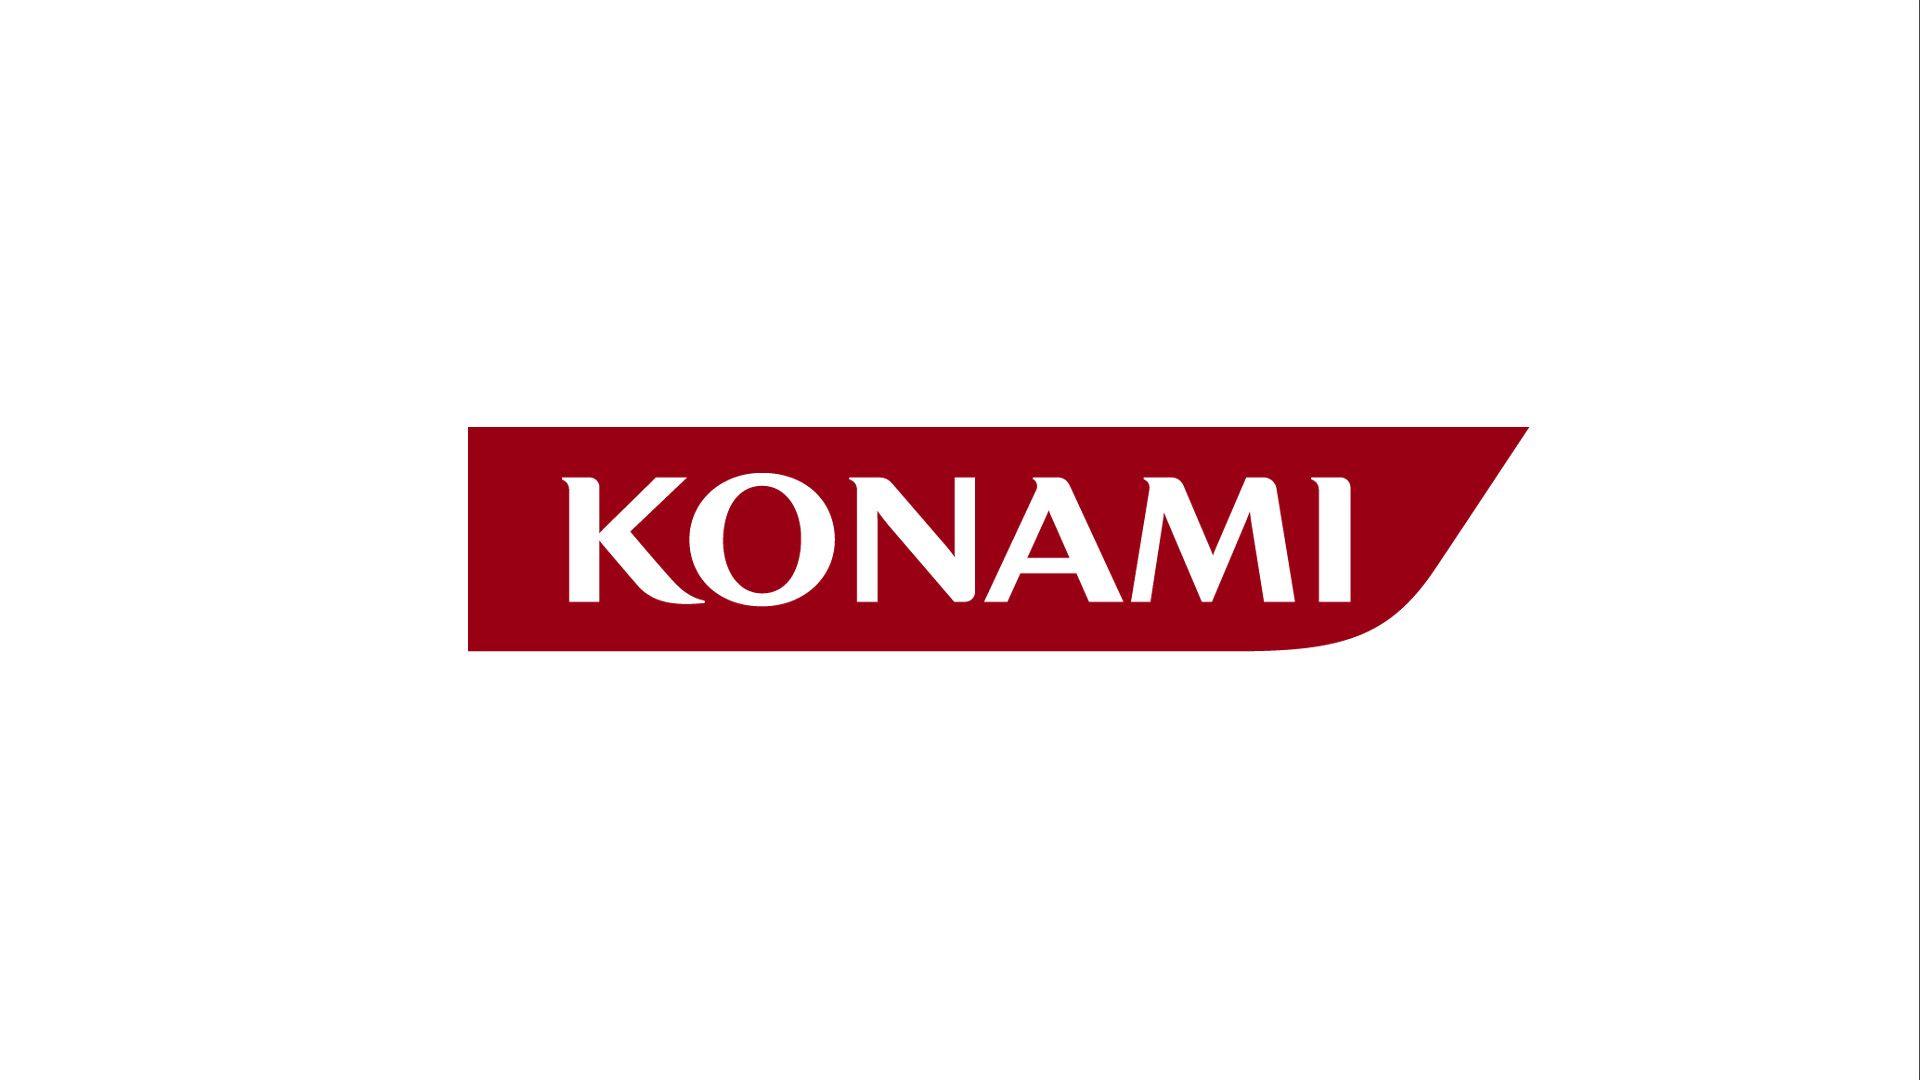 Konami aumenta il budget per i videogiochi